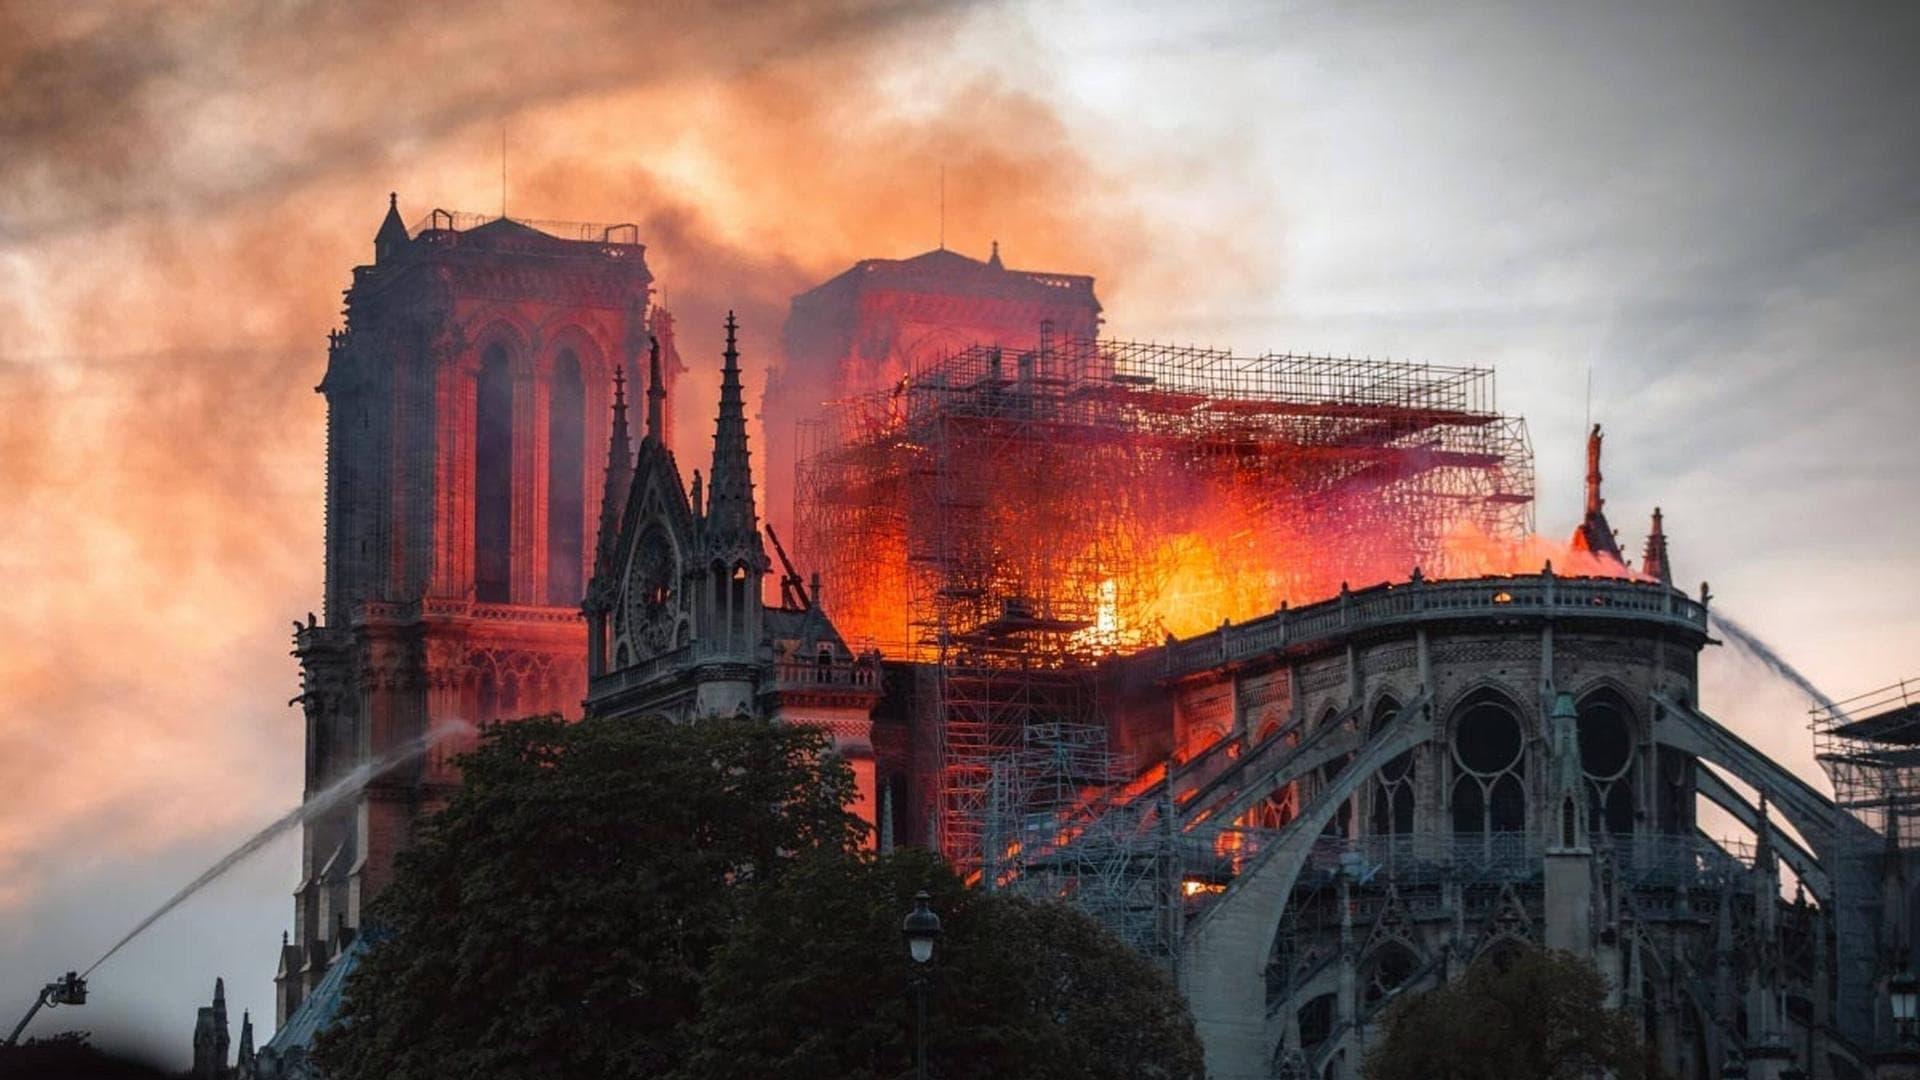 Notre-Dame on Fire backdrop